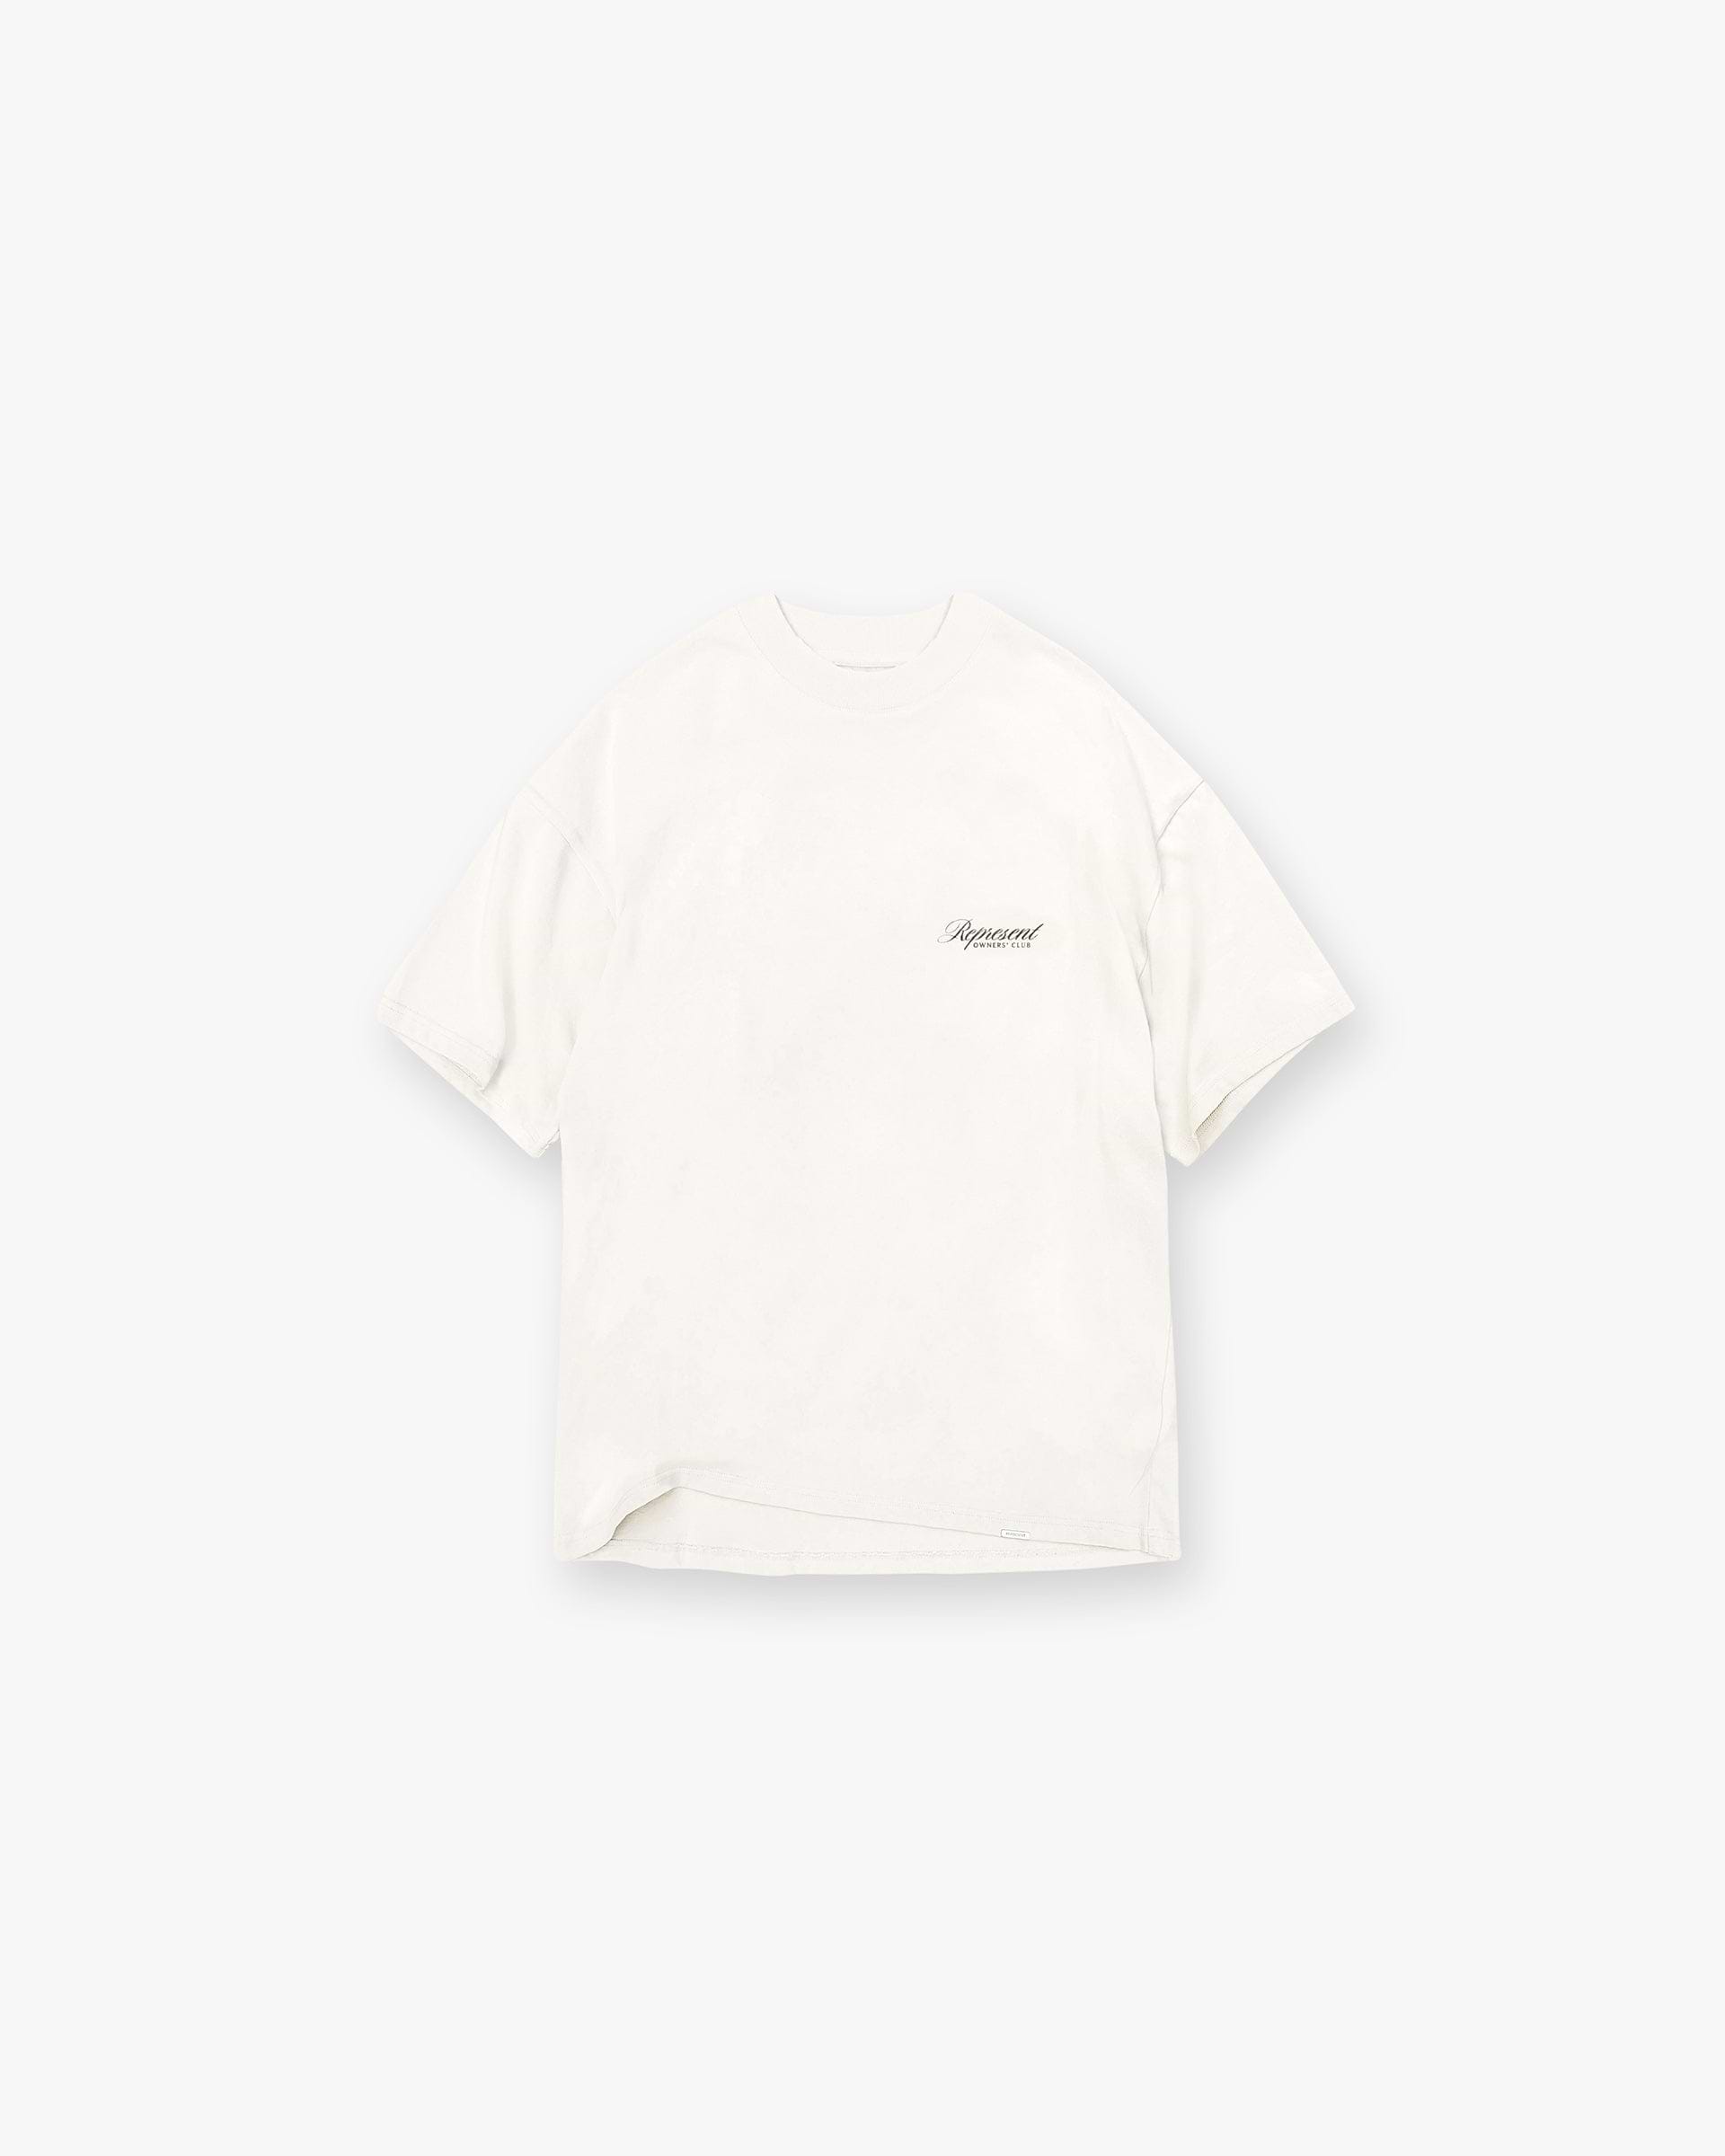 Represent Owners Club Script T-Shirt - Flat White